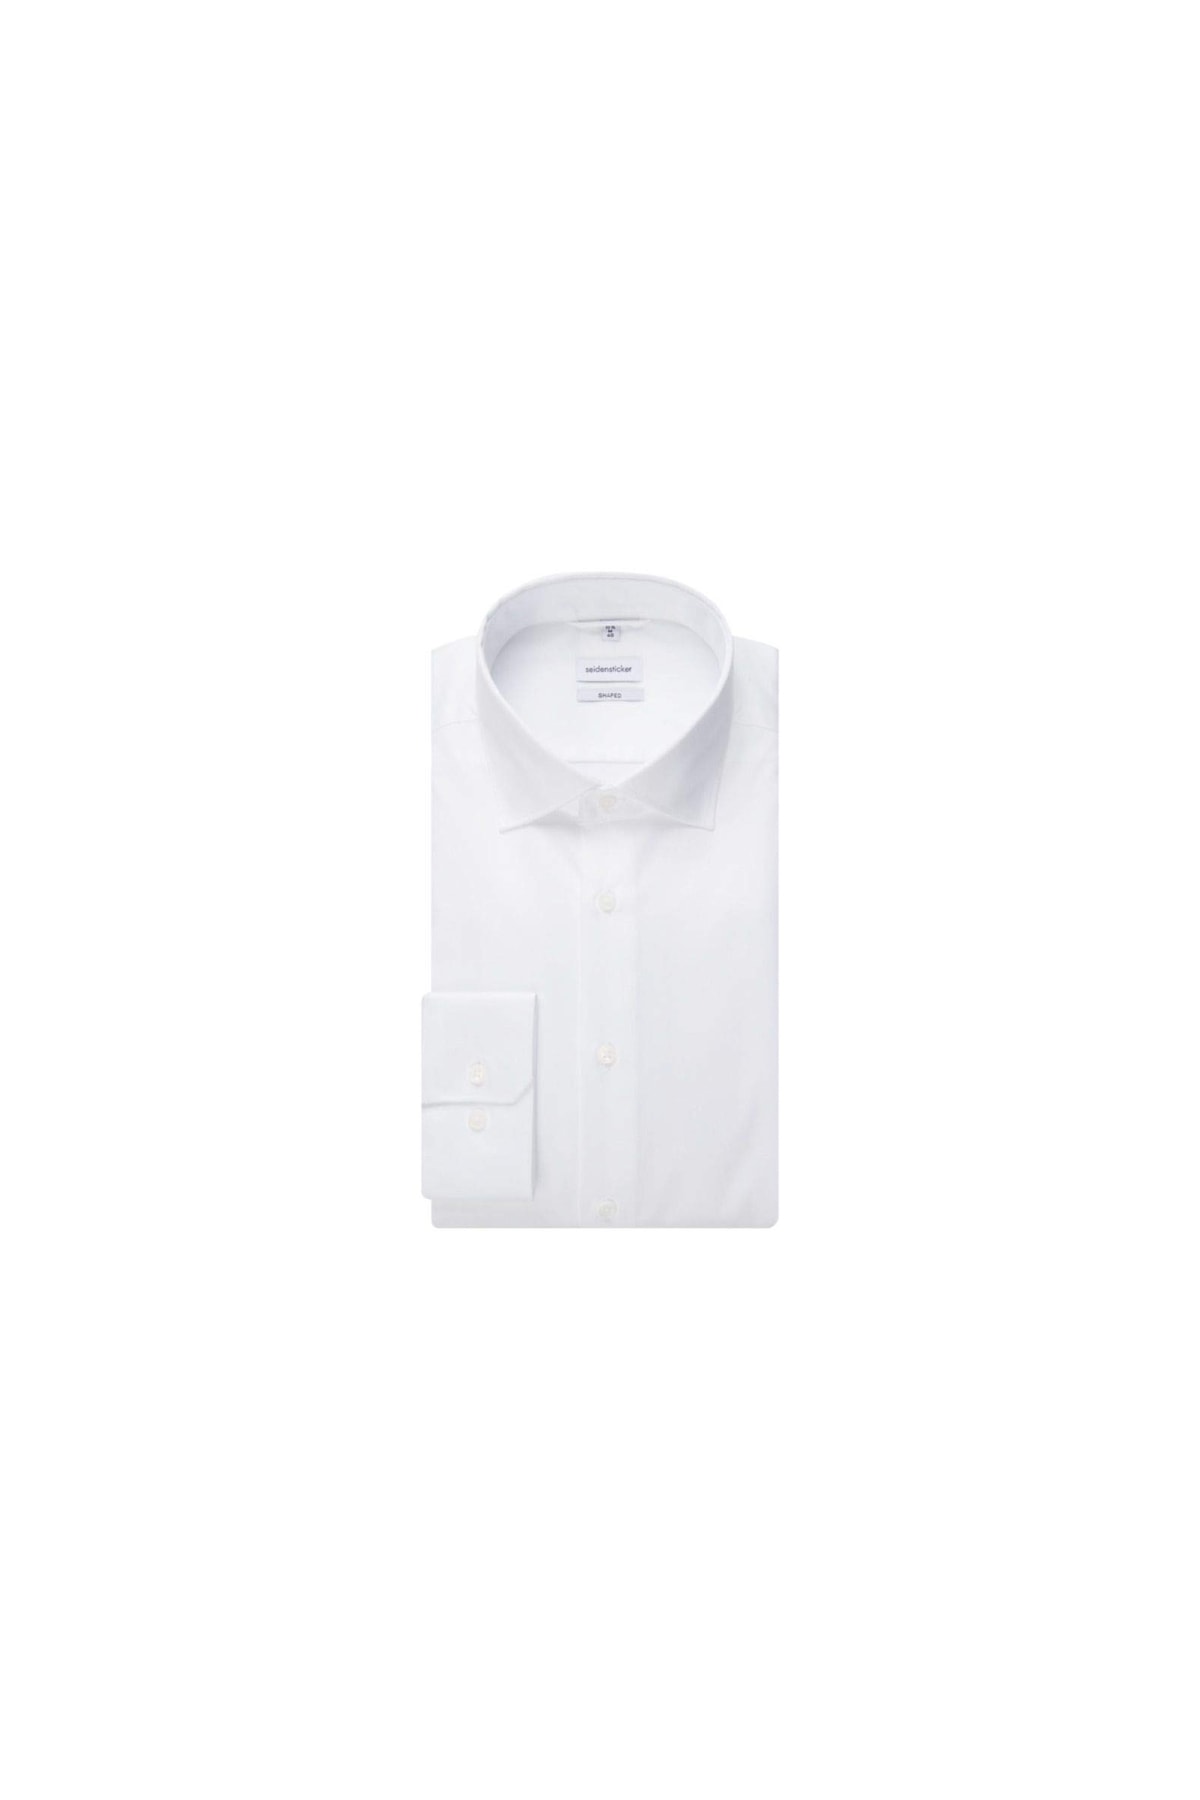 Seidensticker Hemd Weiß Regular Fit Fast ausverkauft